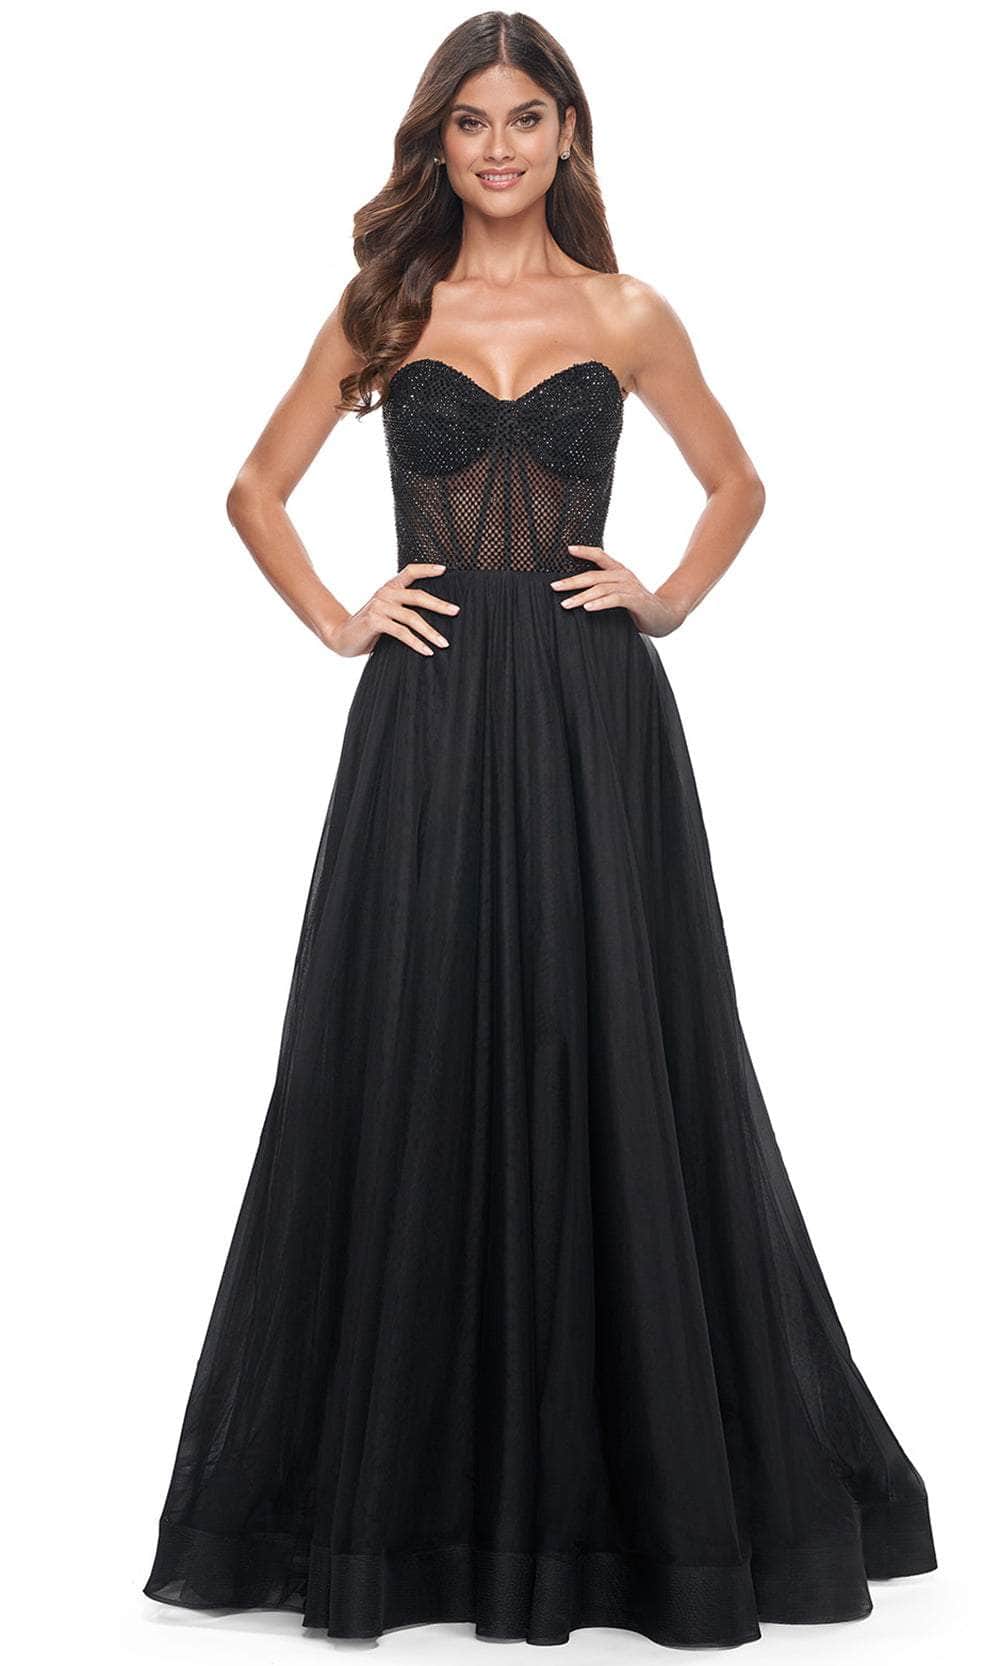 La Femme 32216 - Strapless A-Line Prom Dress Special Occasion Dress 00 / Black